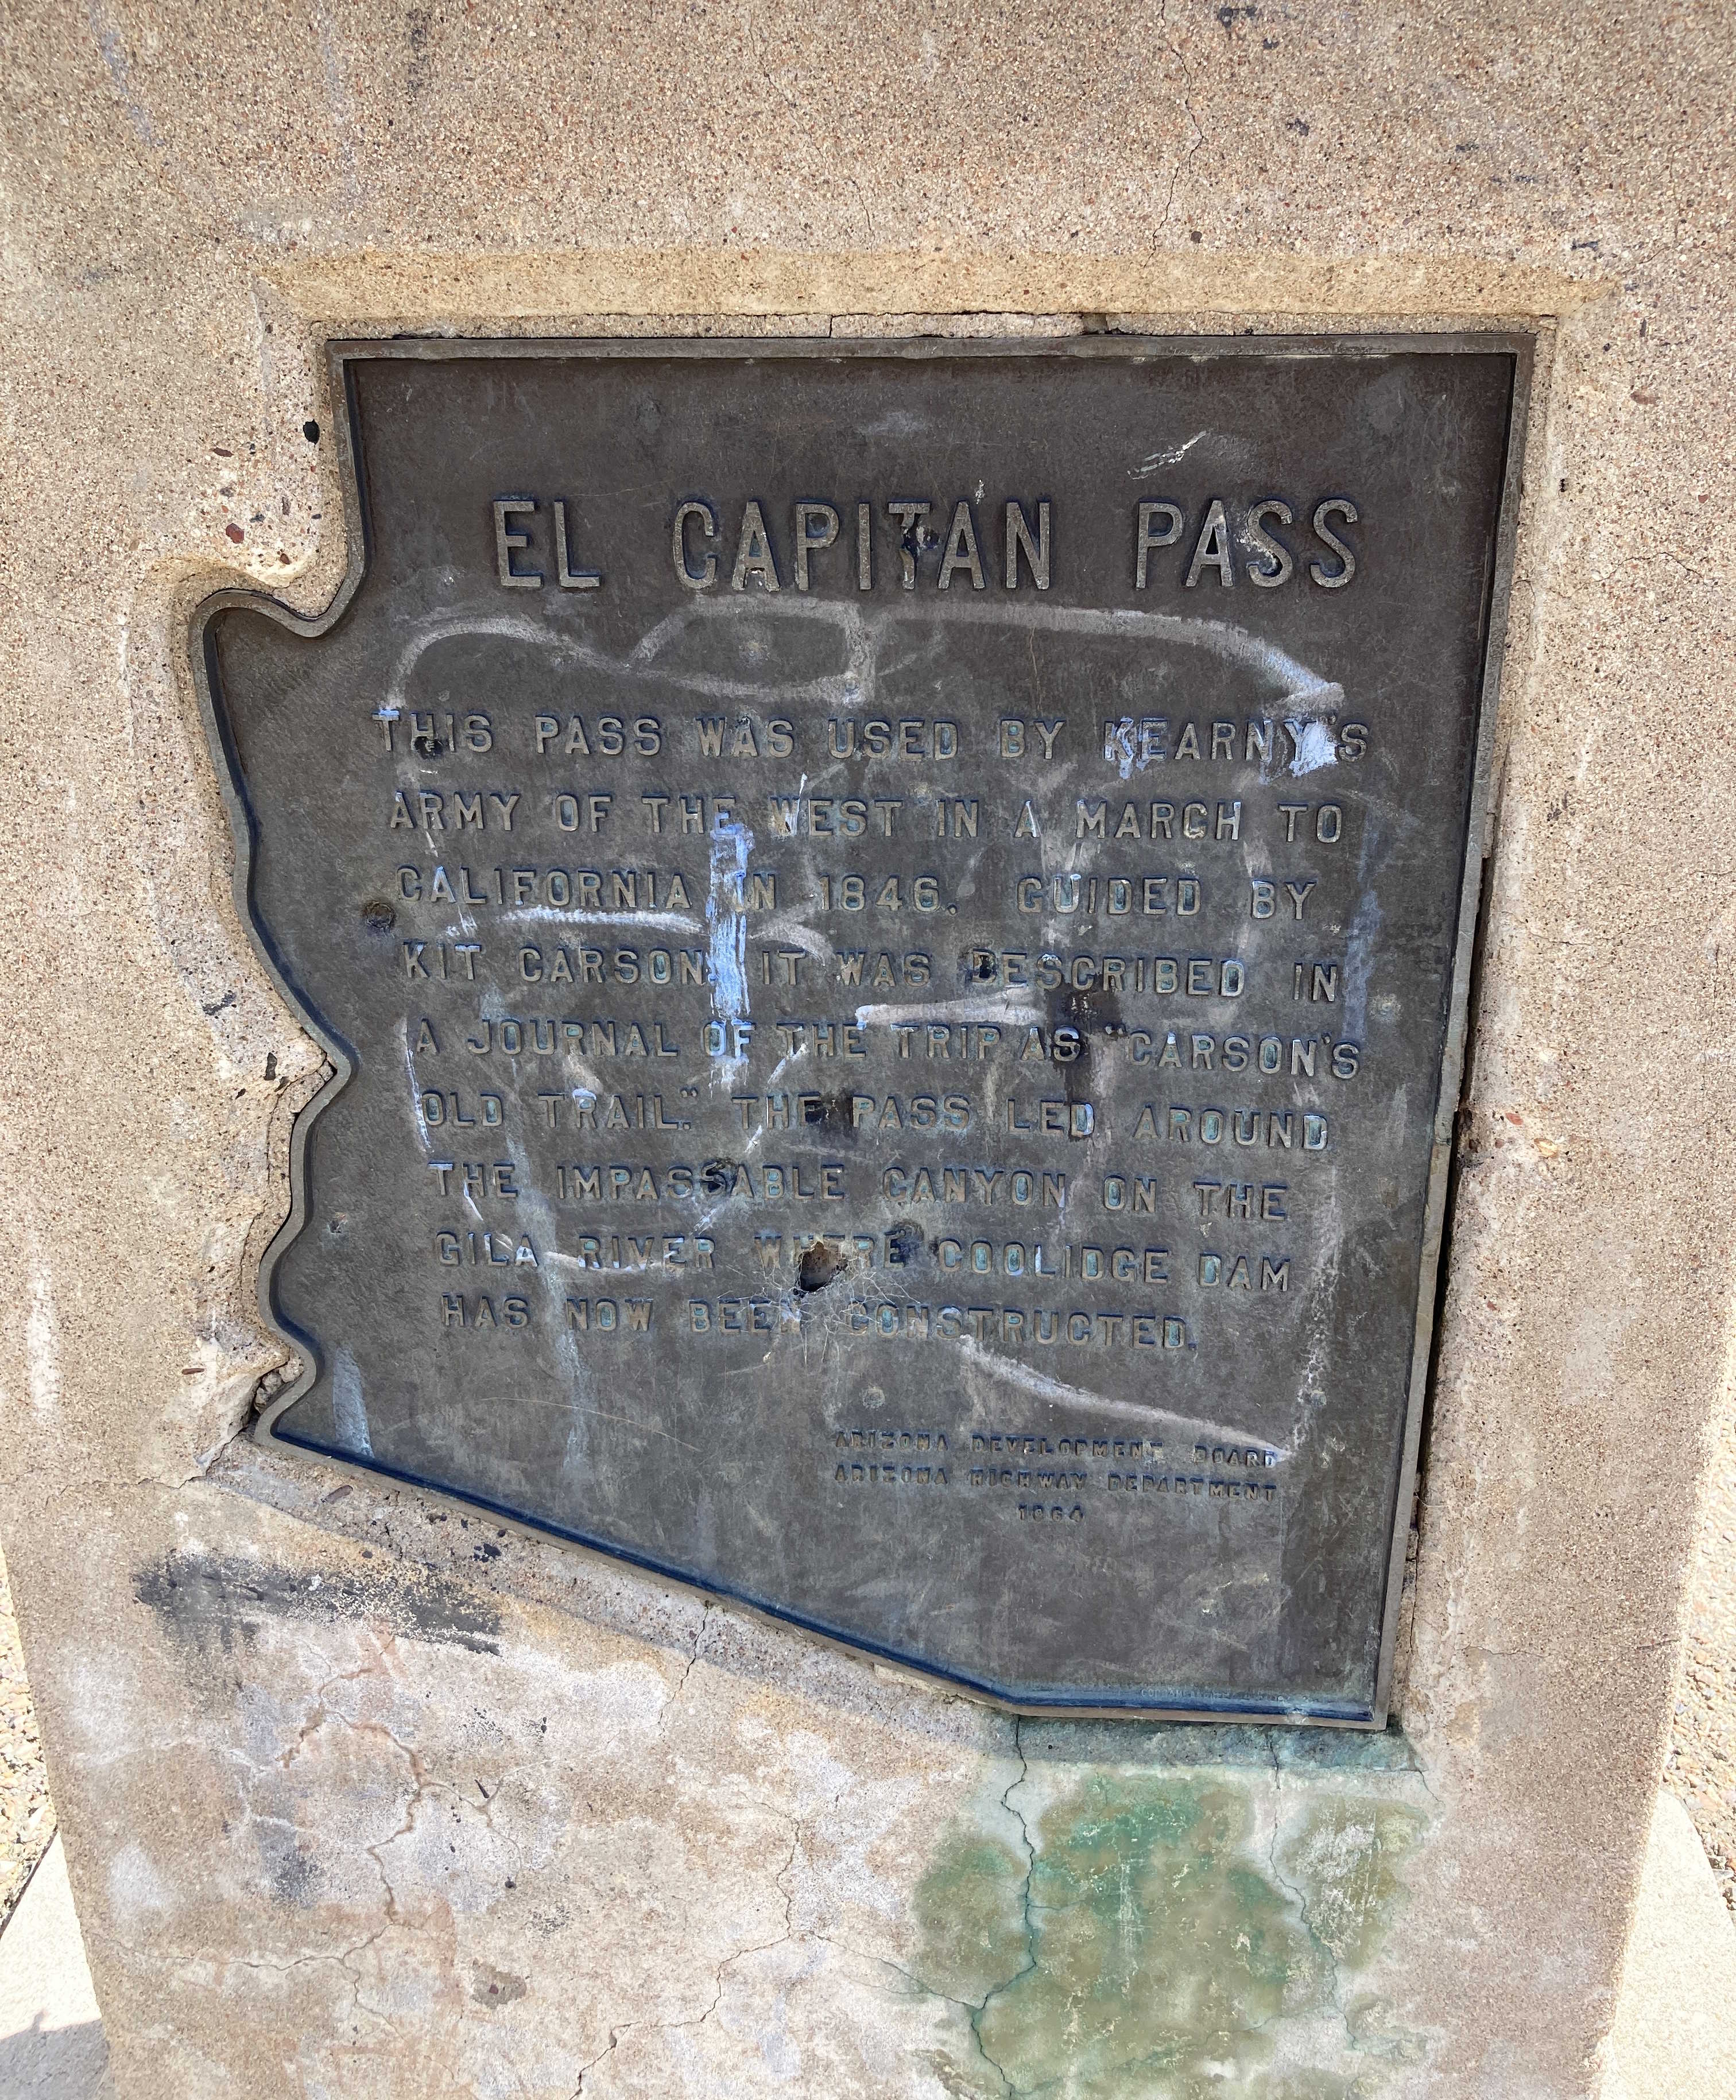 El Capitan Pass informational plaque